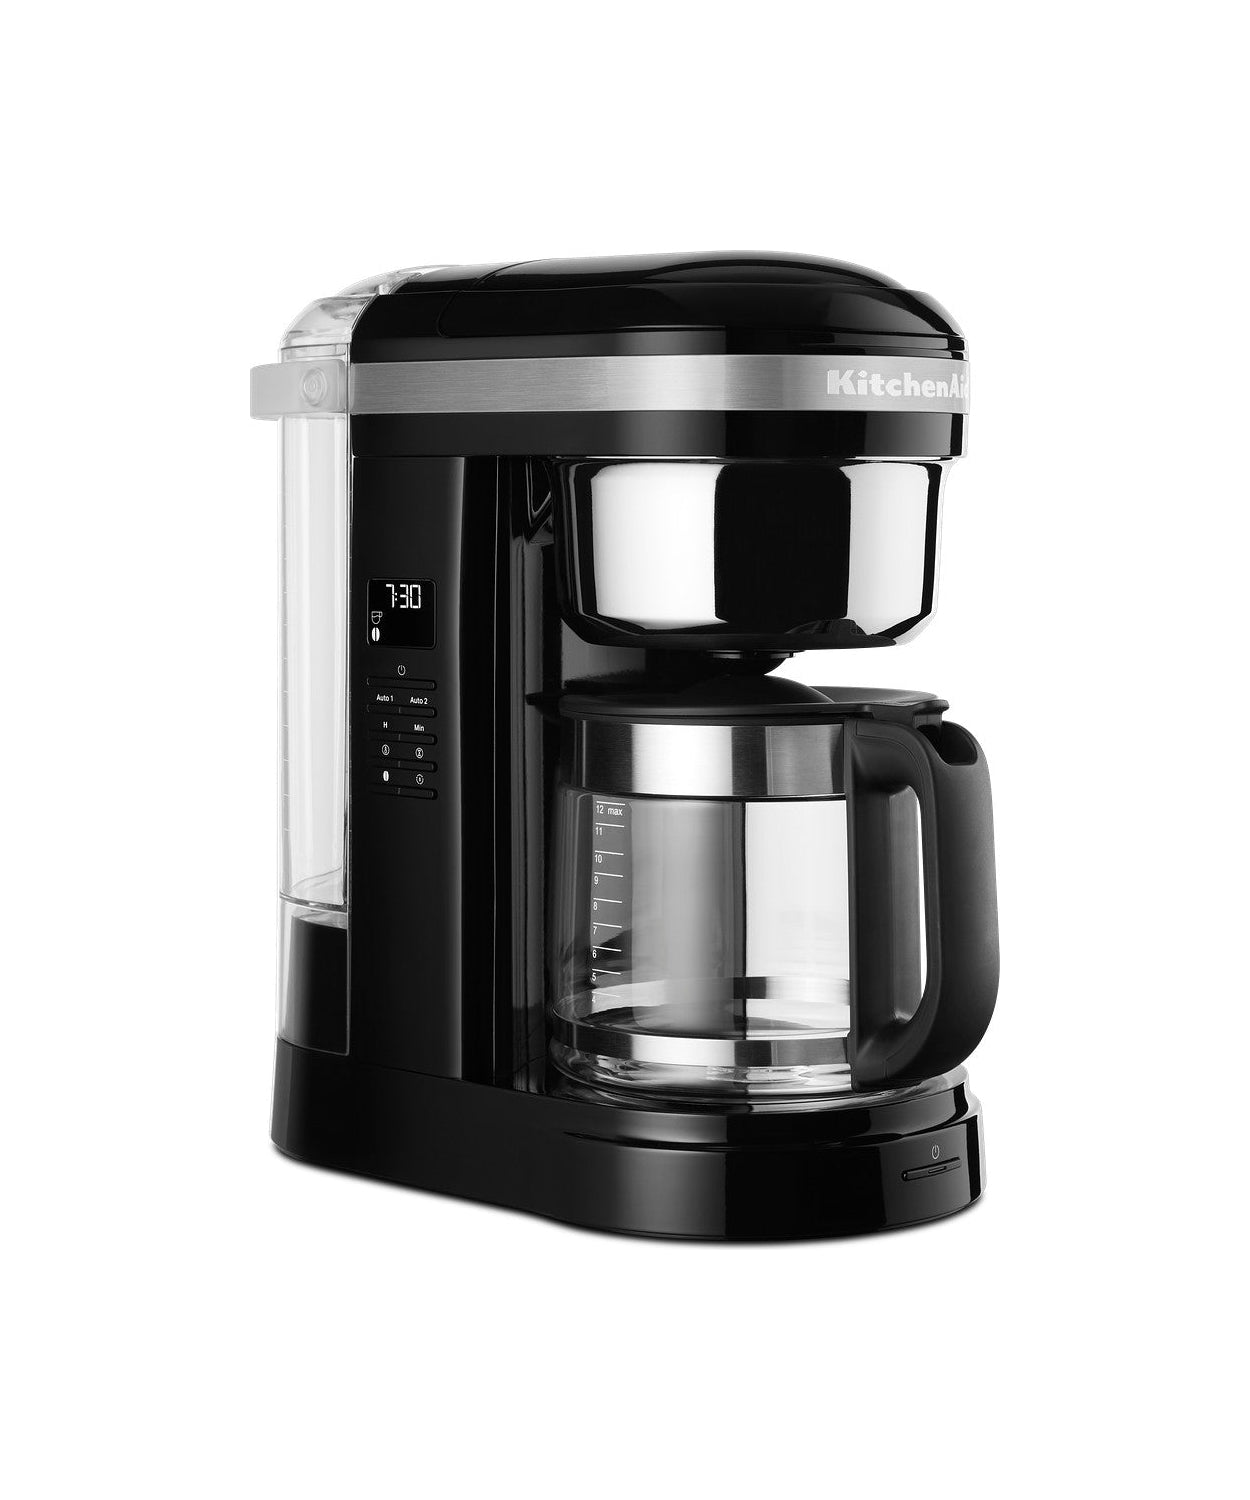 Küchenhilfe 5 KCM1209 Filter Kaffeemaschine 1.7 l, Onyx Schwarz